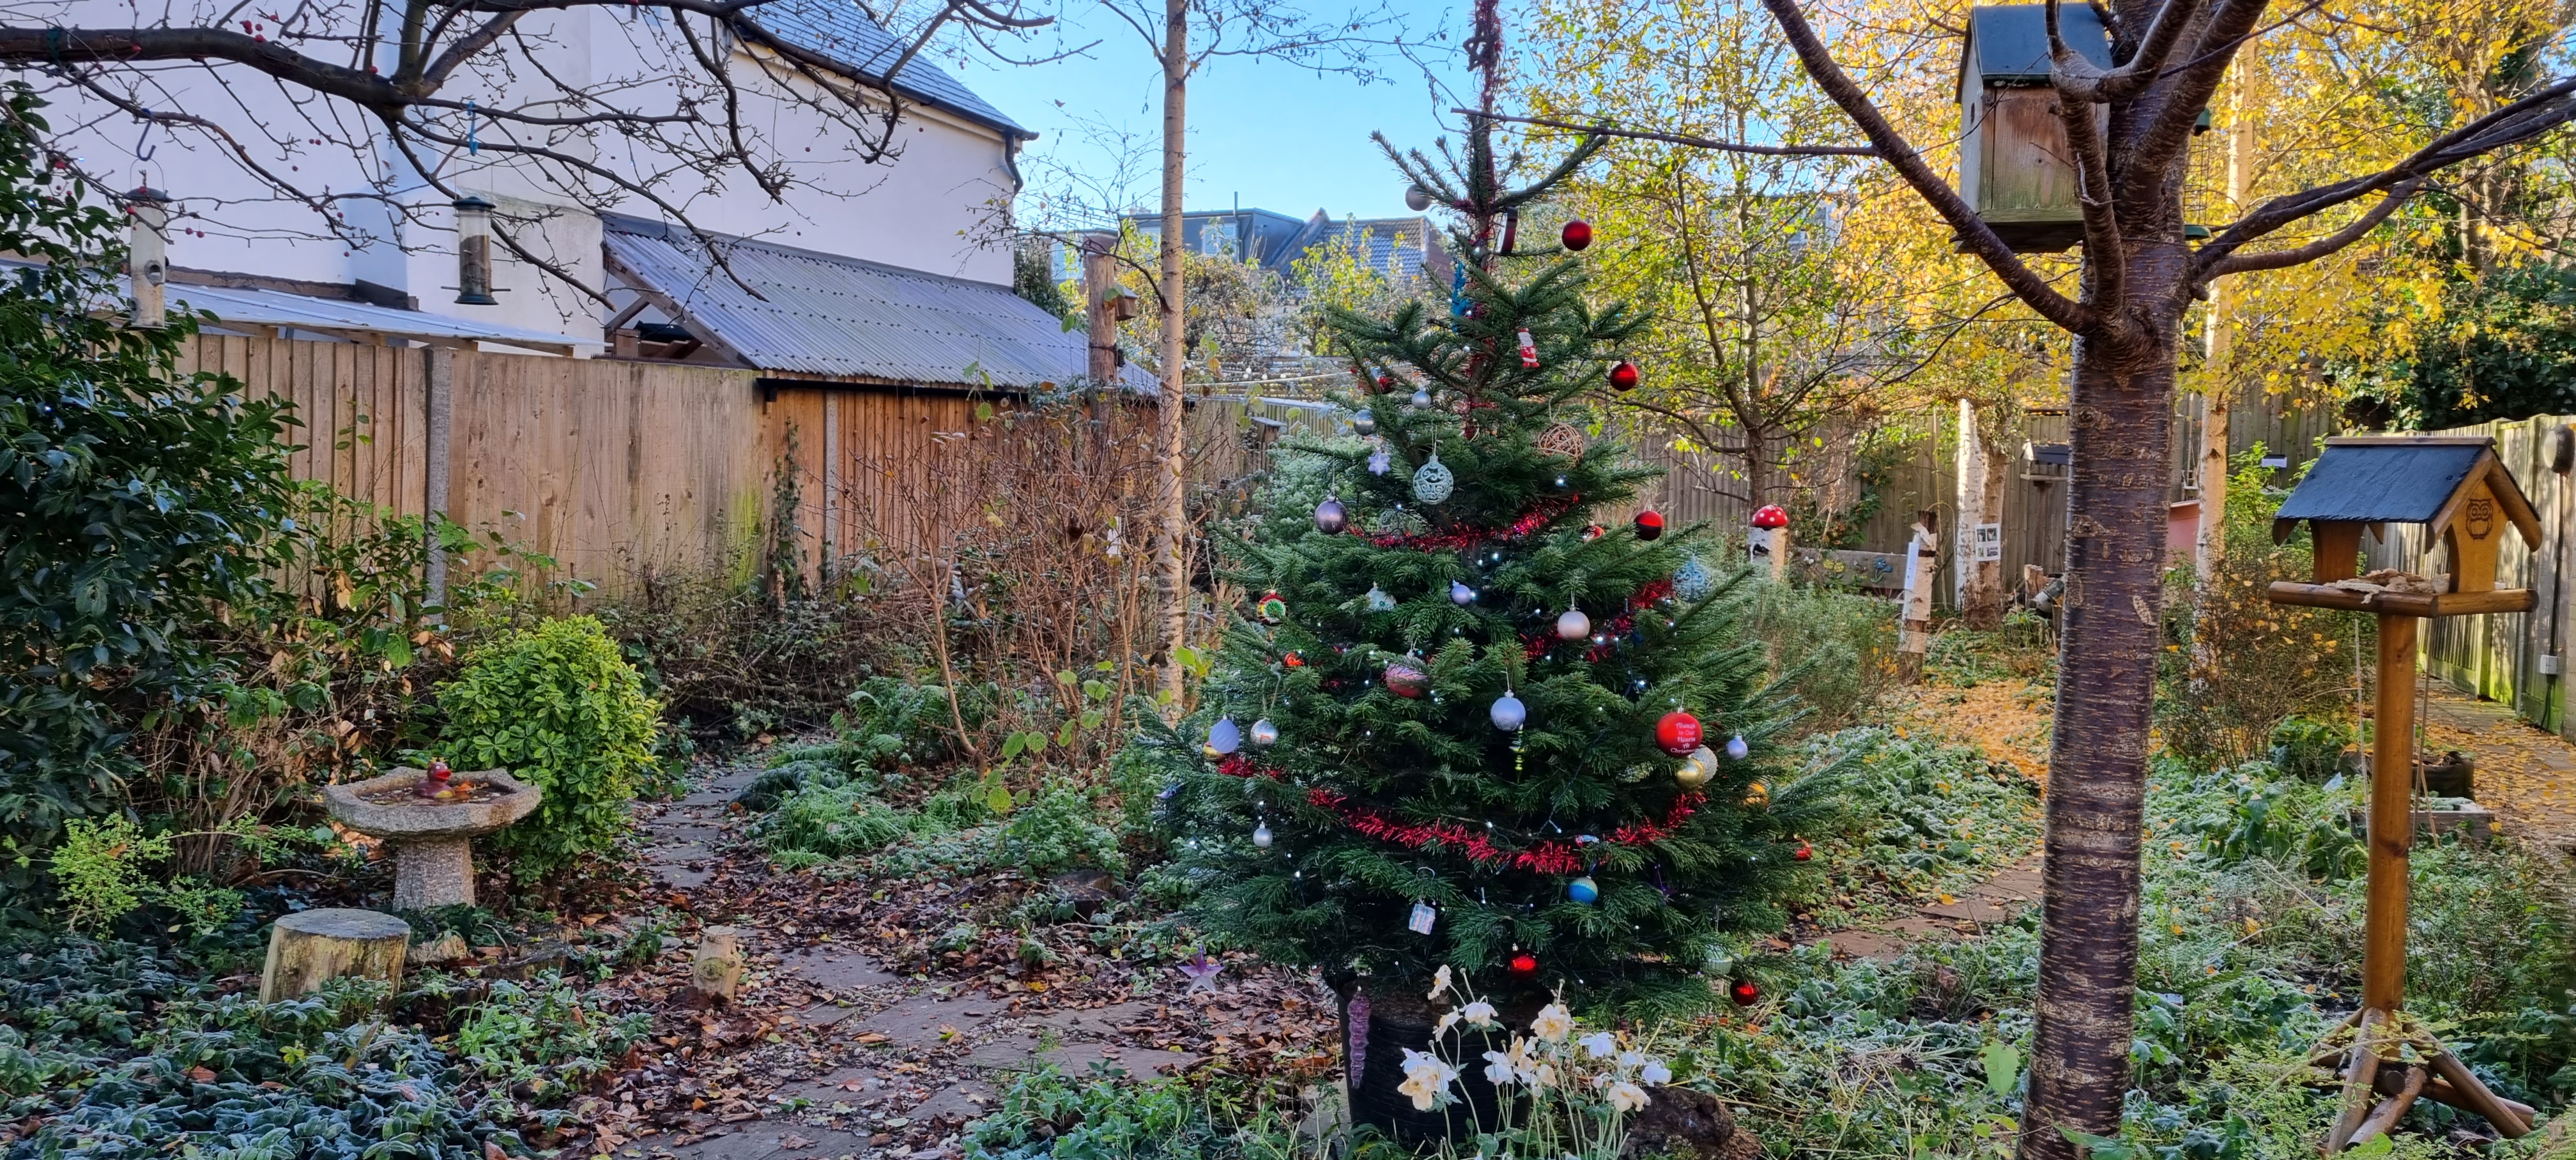 Christmas tree 2022